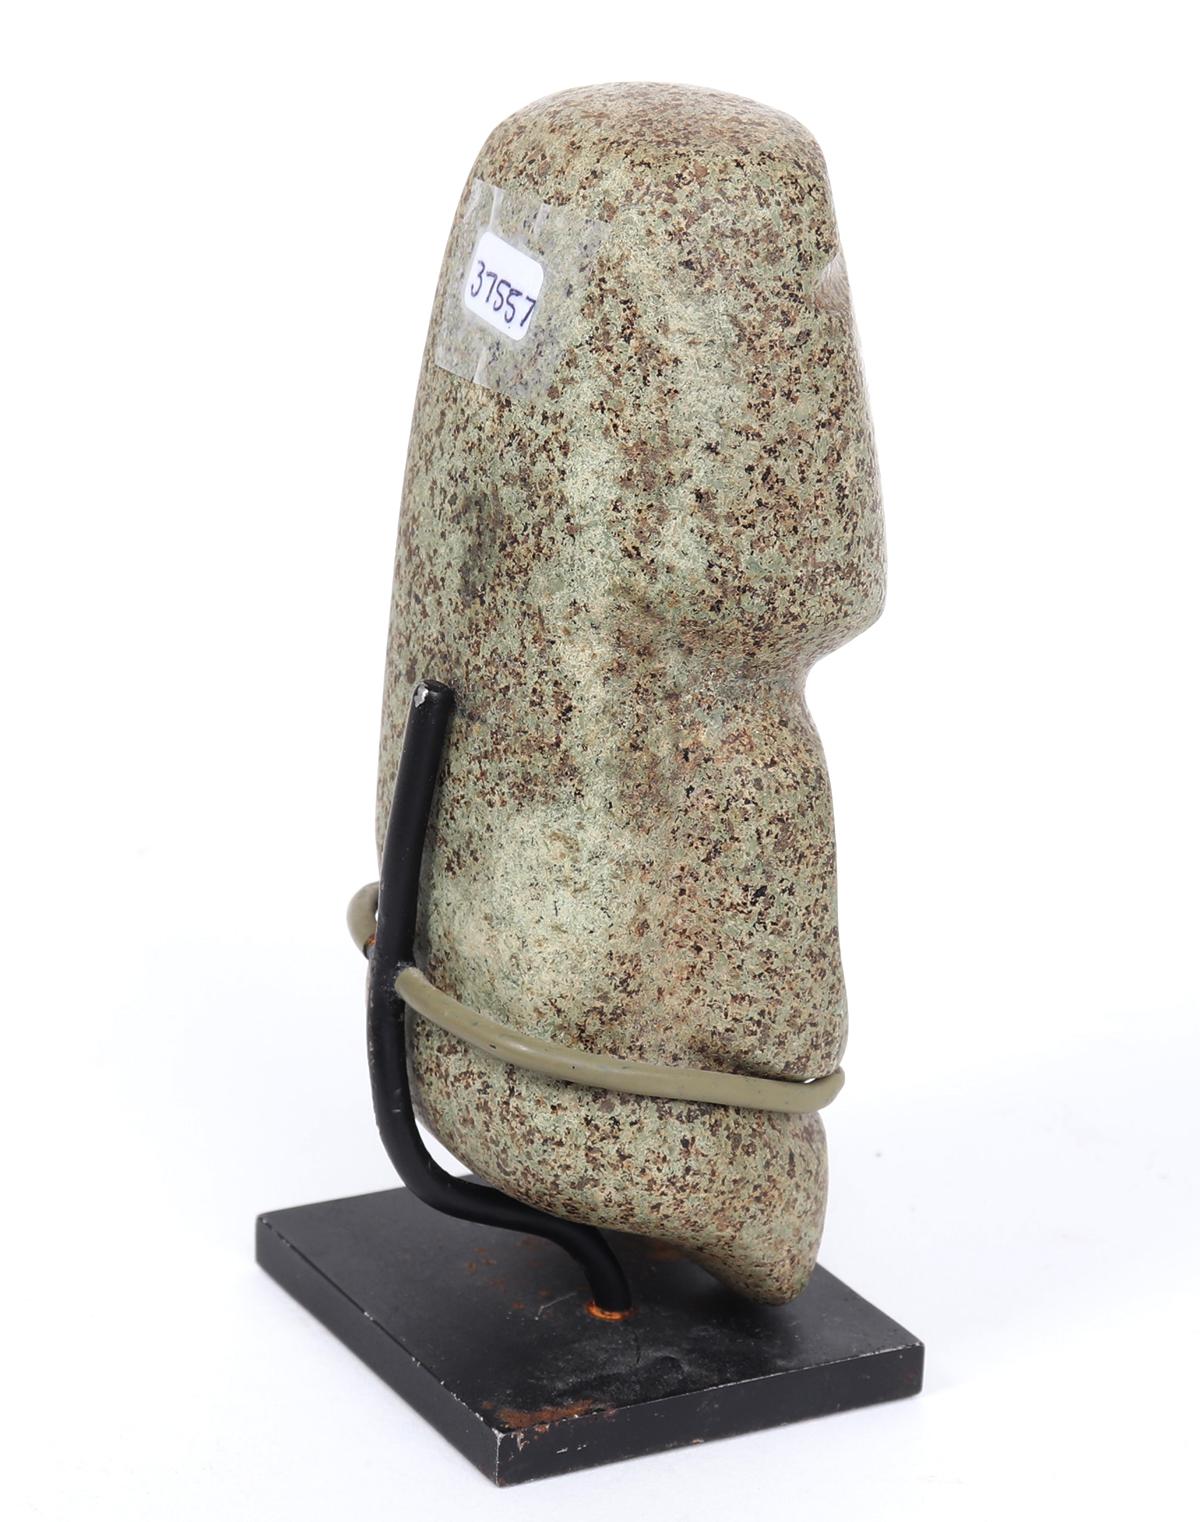 Mezcala Idol Standing Figure Type M-22, 700-100 BCE